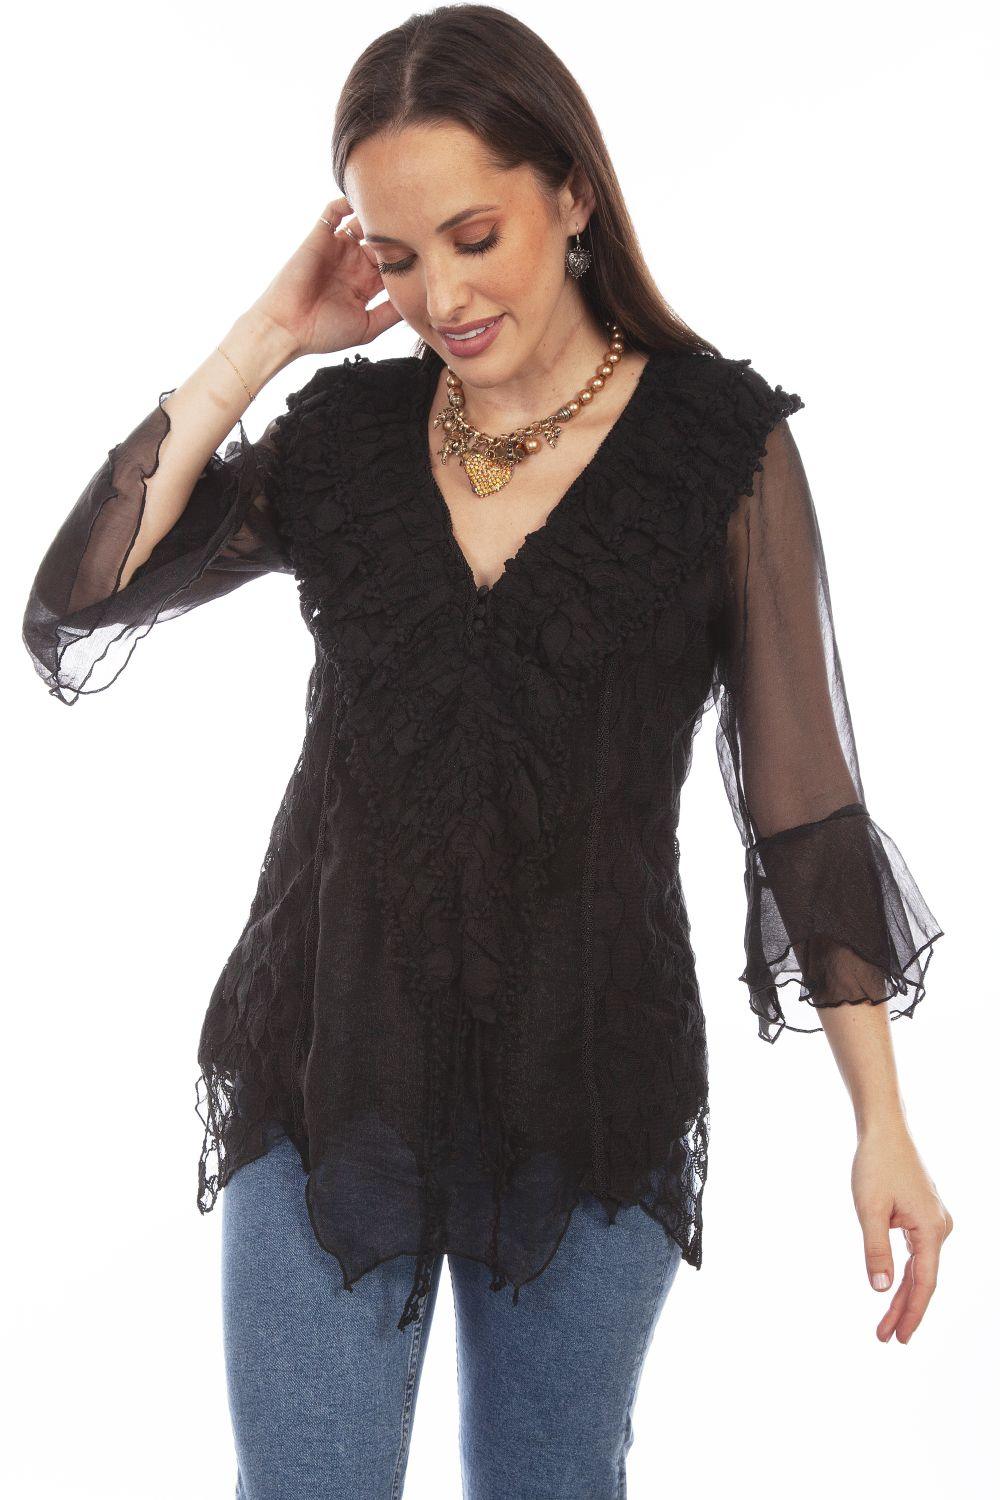 Honey Creek Black Crochet Lace Top - Flyclothing LLC